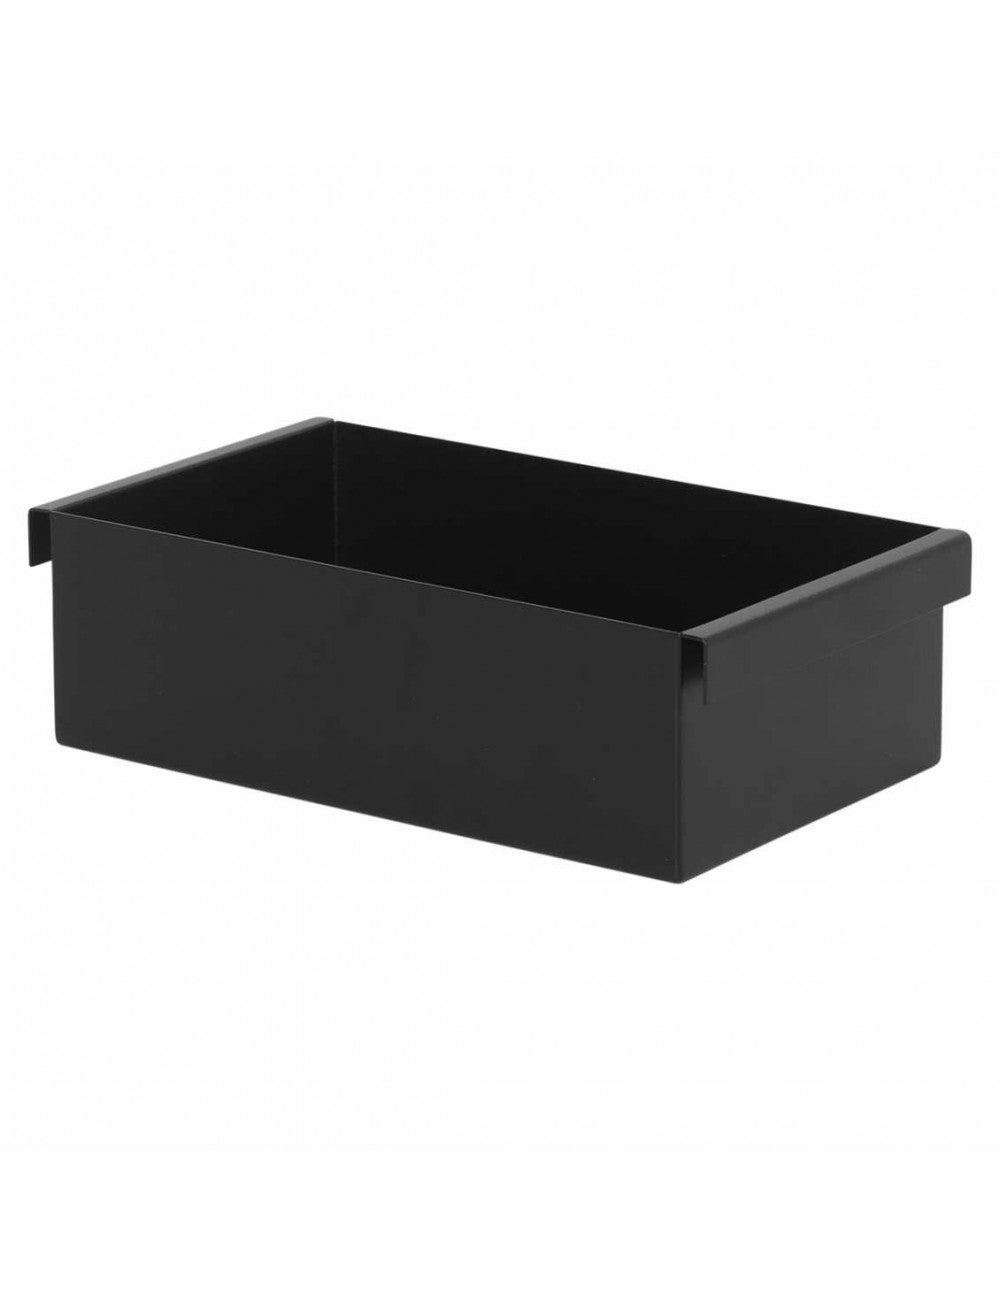 Plant box container - Black, HOME DECOR, FERM, - Fabrica